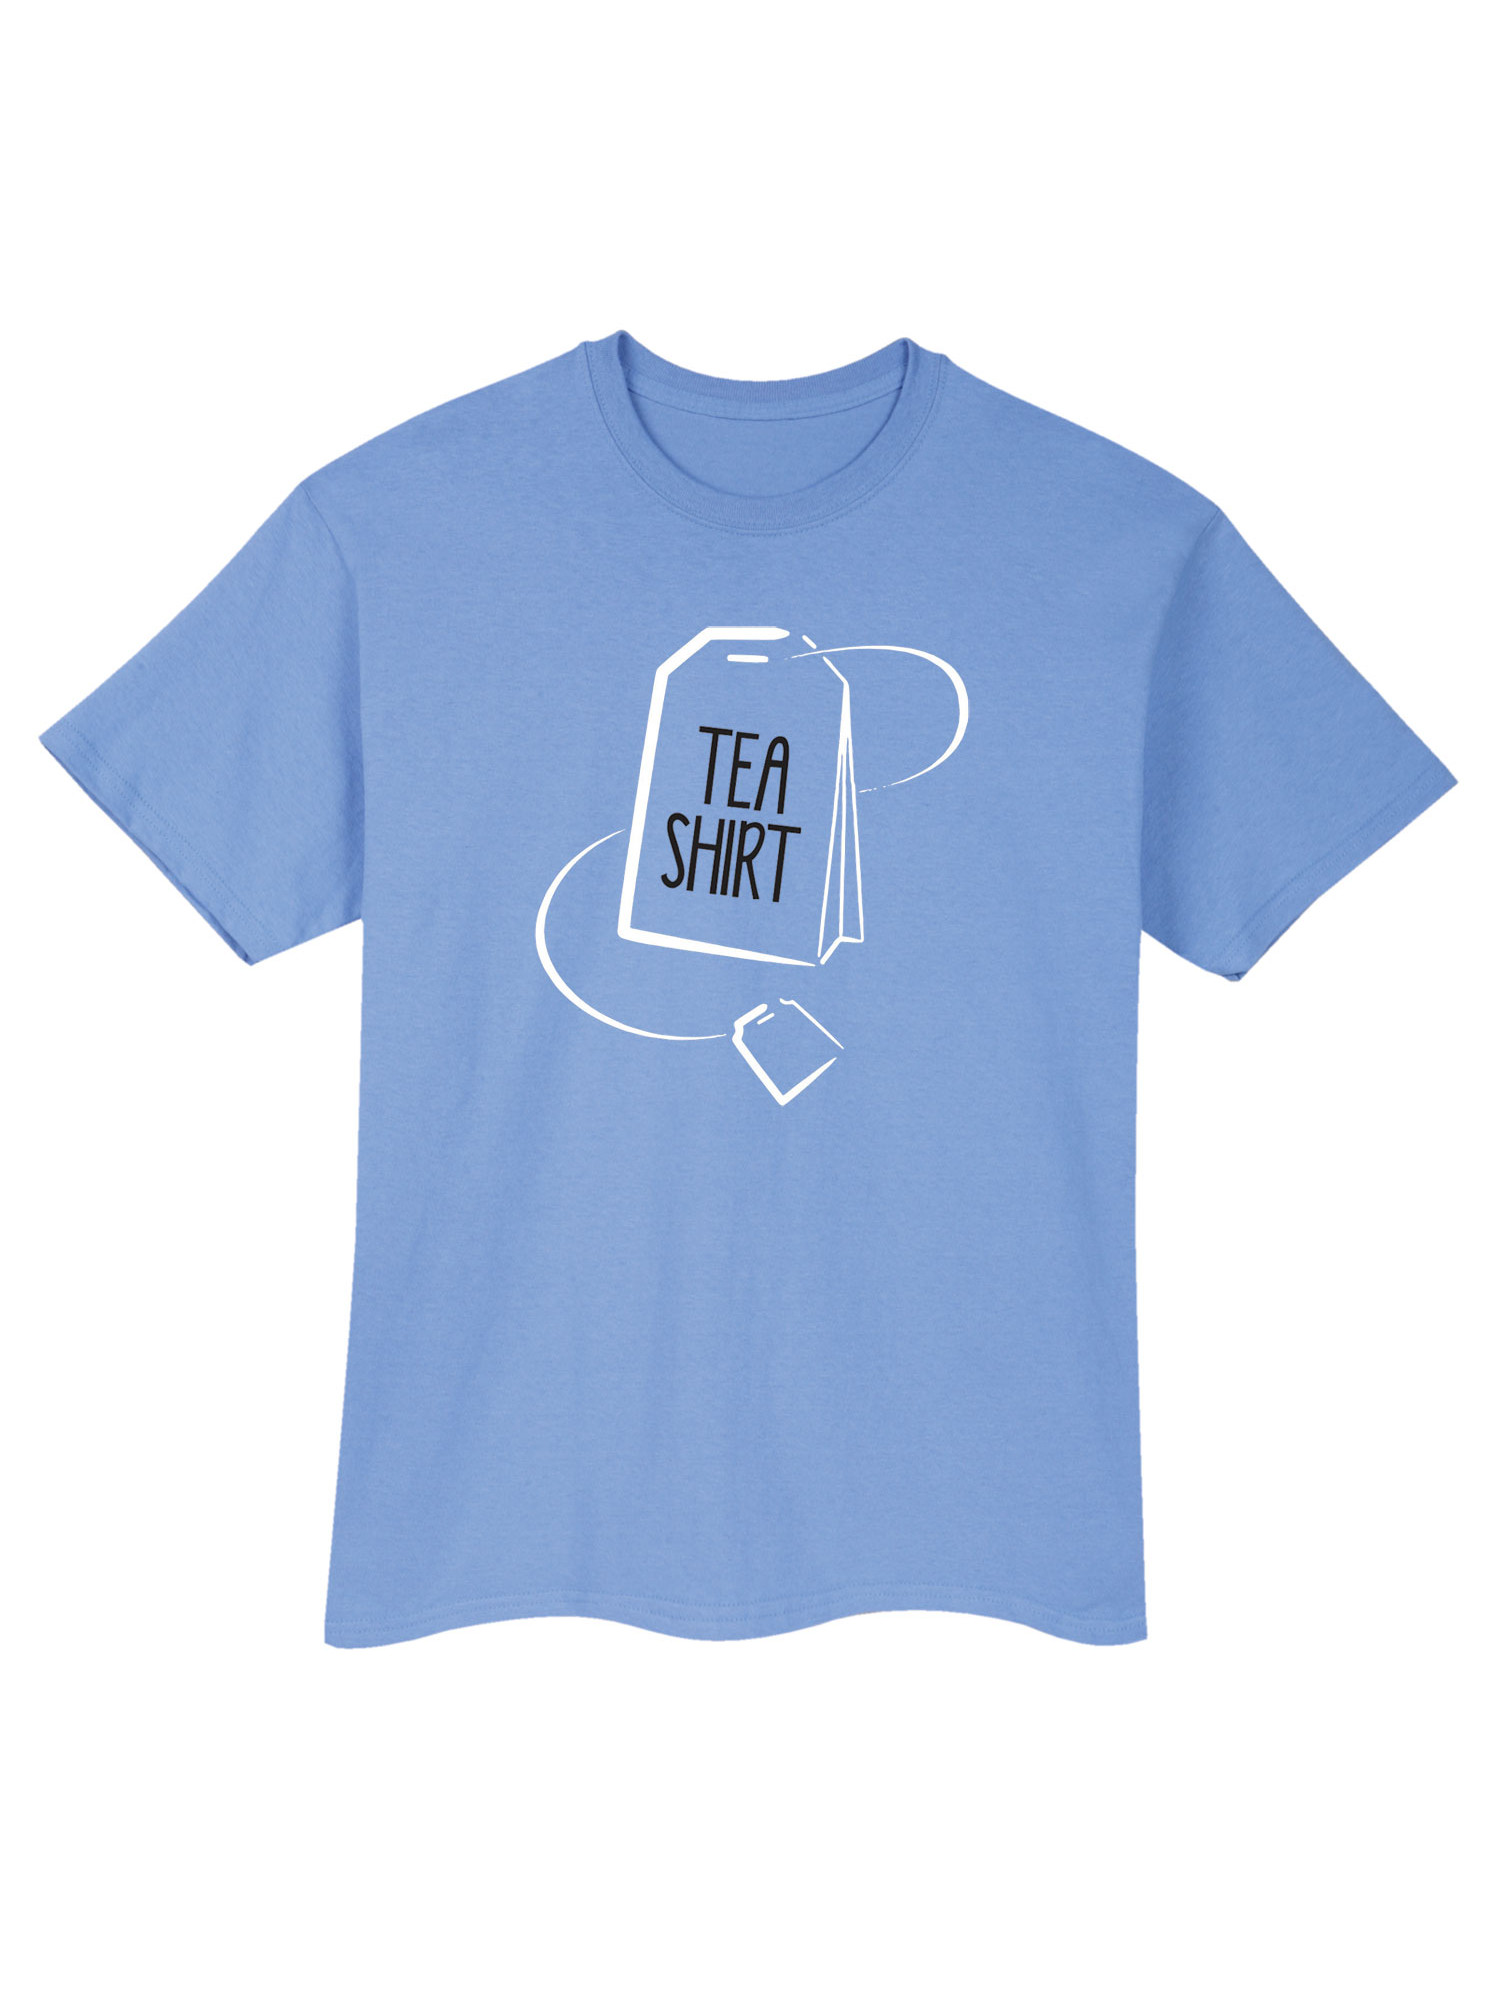 Product image for Tea T-Shirt or Sweatshirt